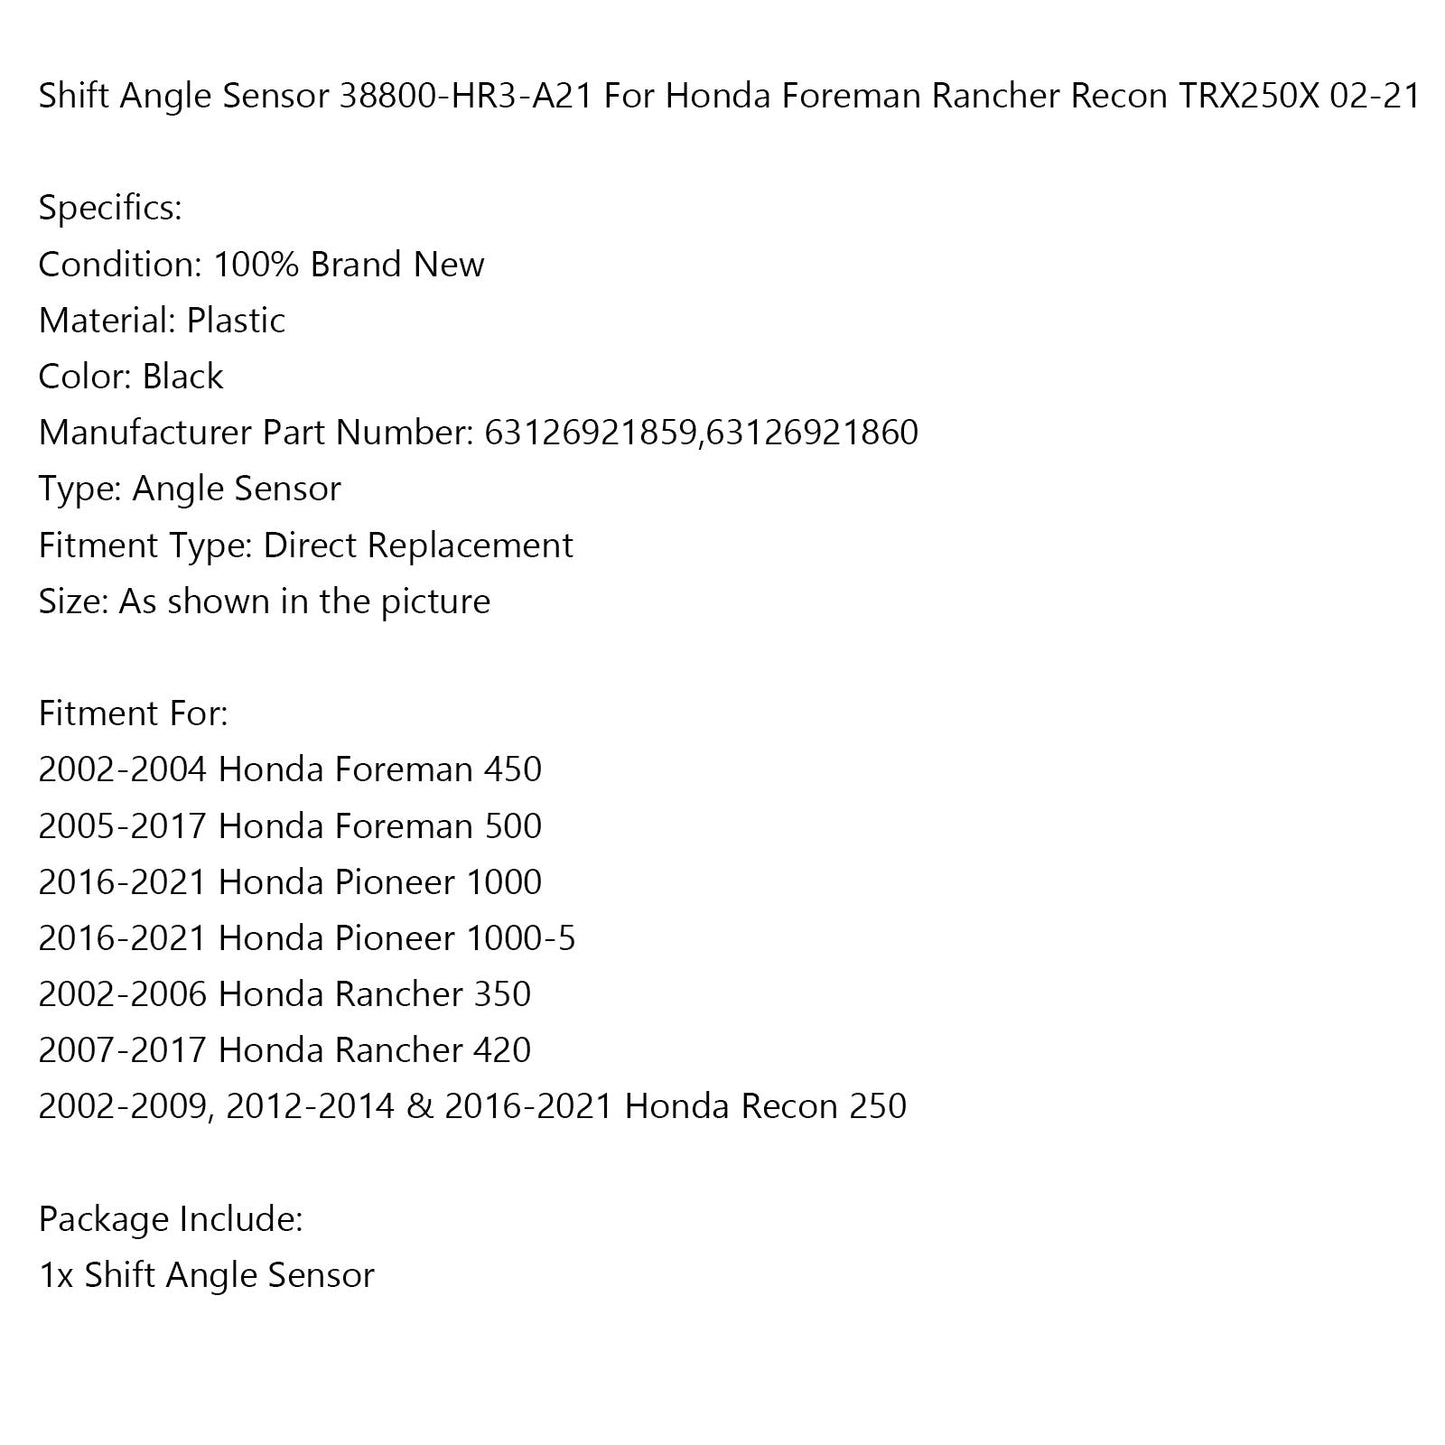 Shift Angle Sensor 38800-HR3-A21 For Honda Foreman Rancher Recon TRX250X 02-21